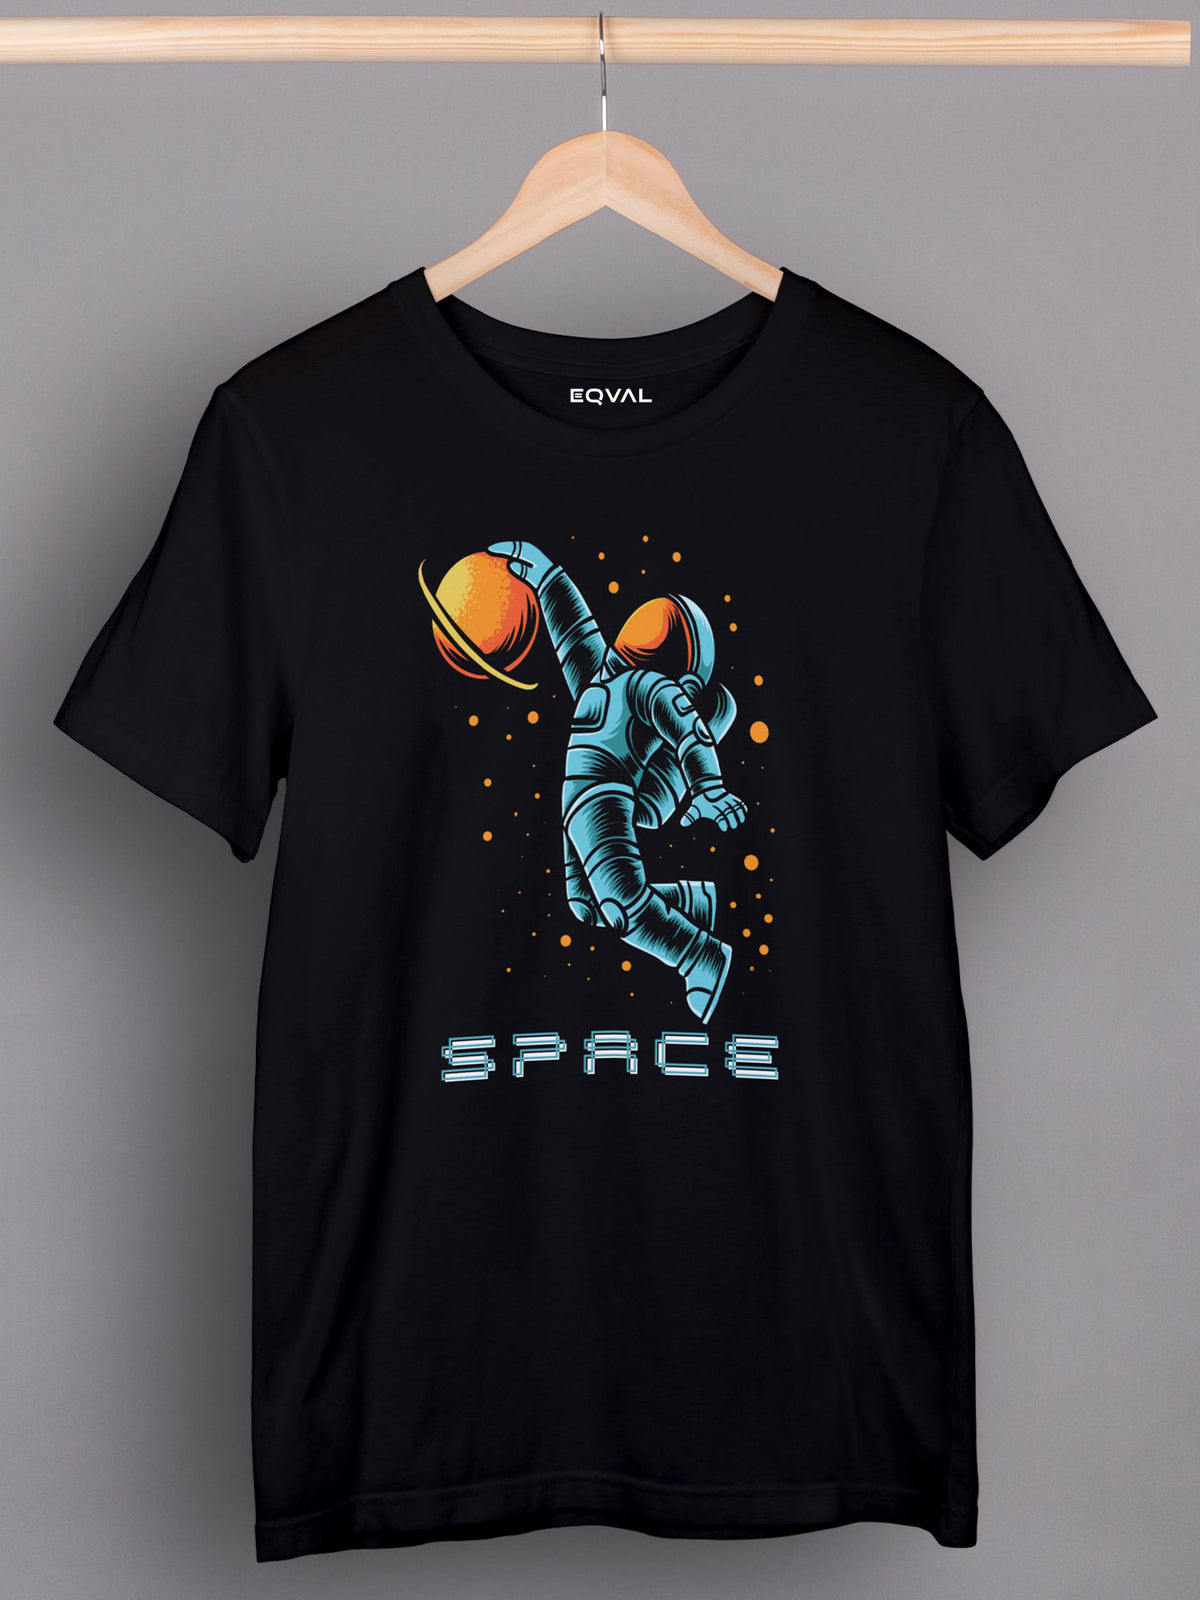 Men's Black Space Printed T-shirt